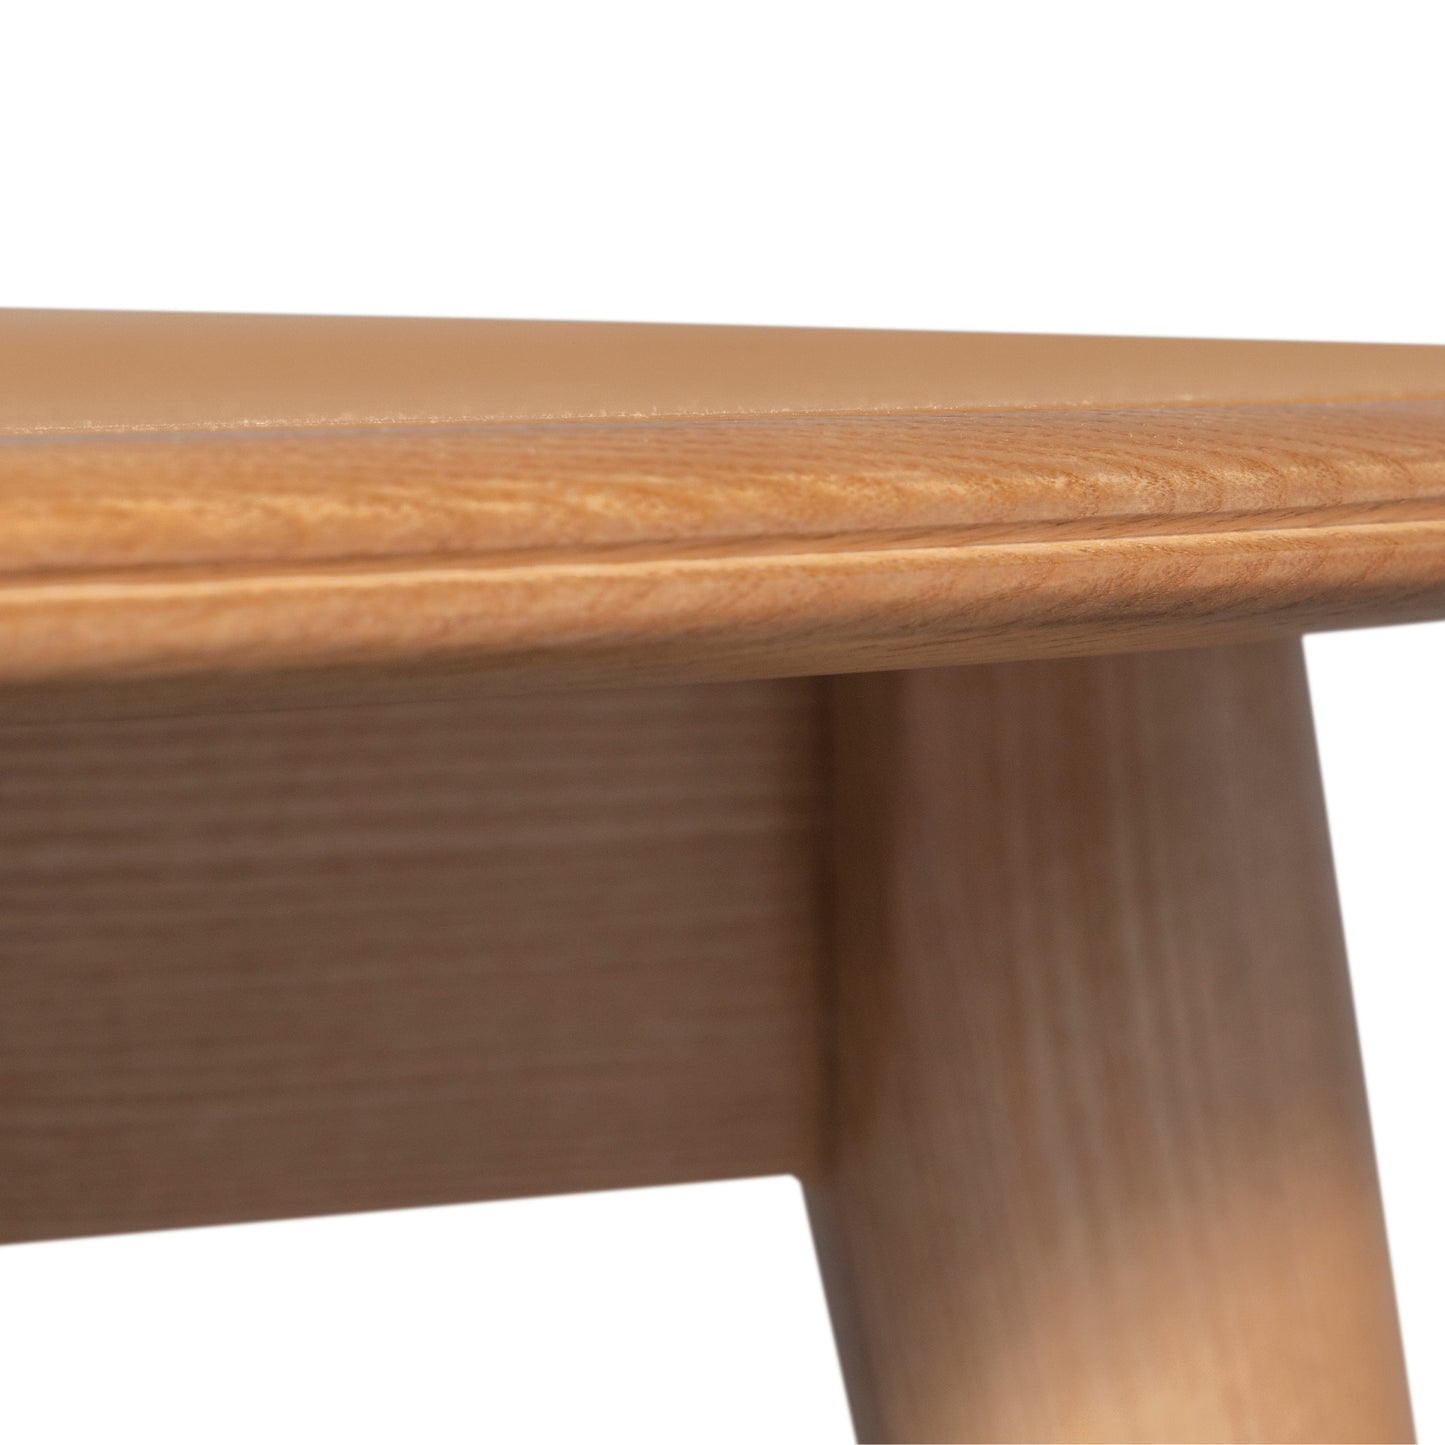 Emilio 120cm Scandinavian Style Solid Ash Wood Round Dining Table - Oak